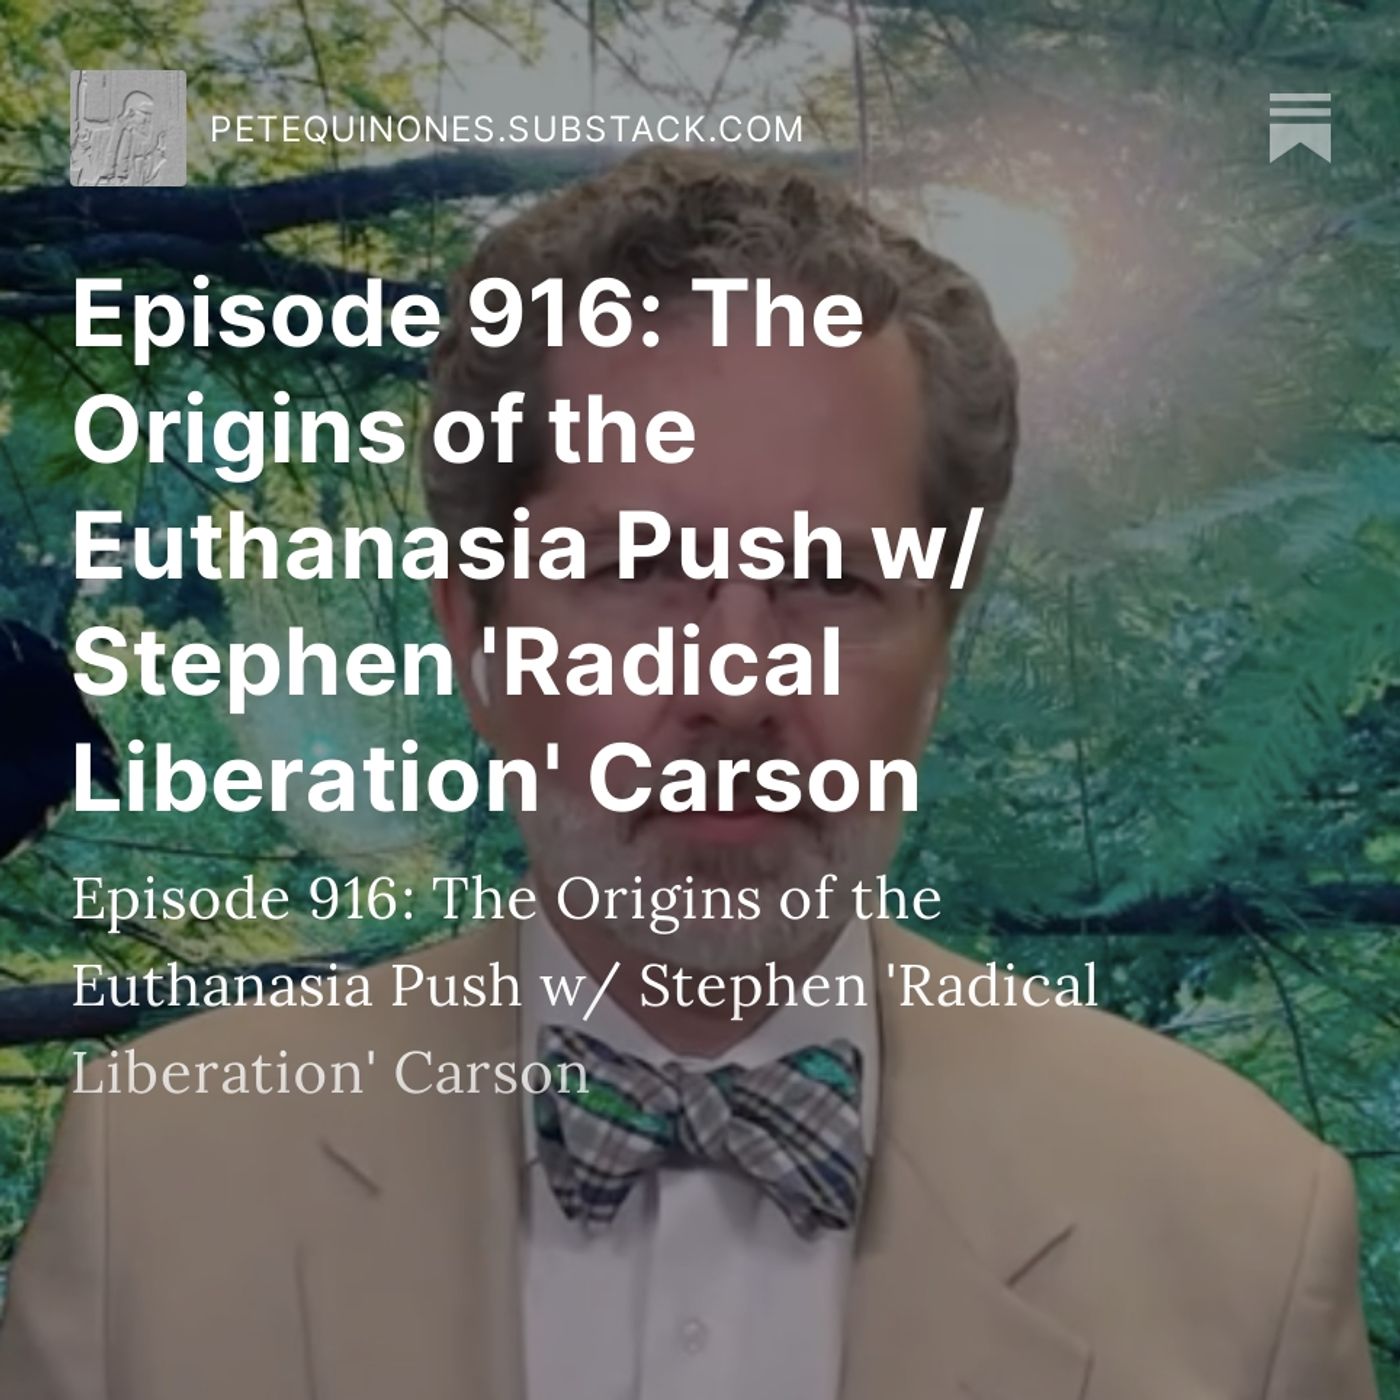 Episode 916: The Origins of the Euthanasia Push w/ Stephen 'Radical Liberation' Carson